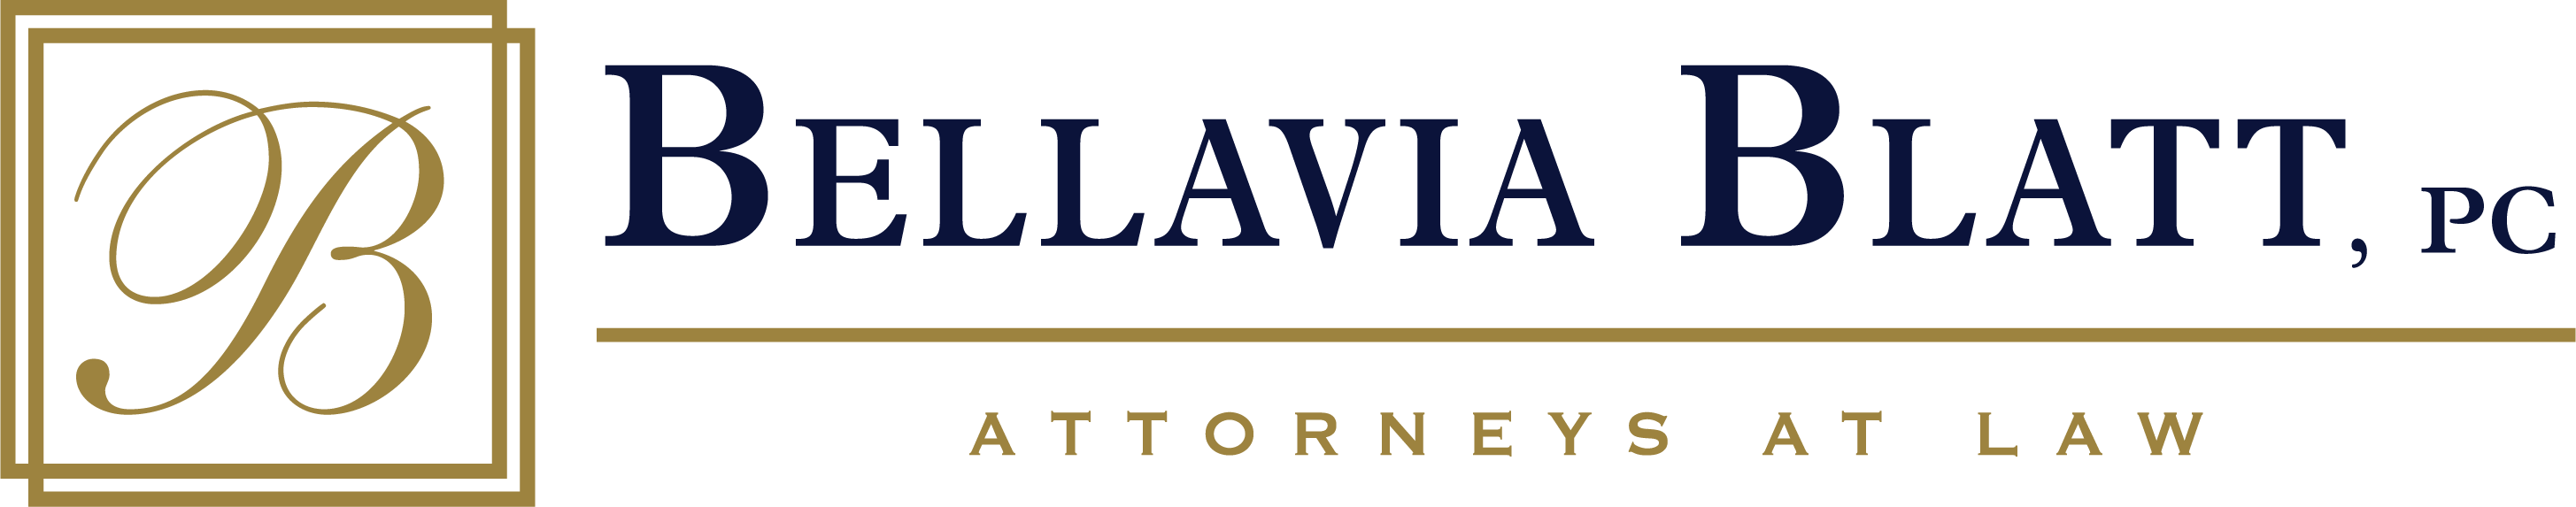 Bellavia Blatt, PC logo